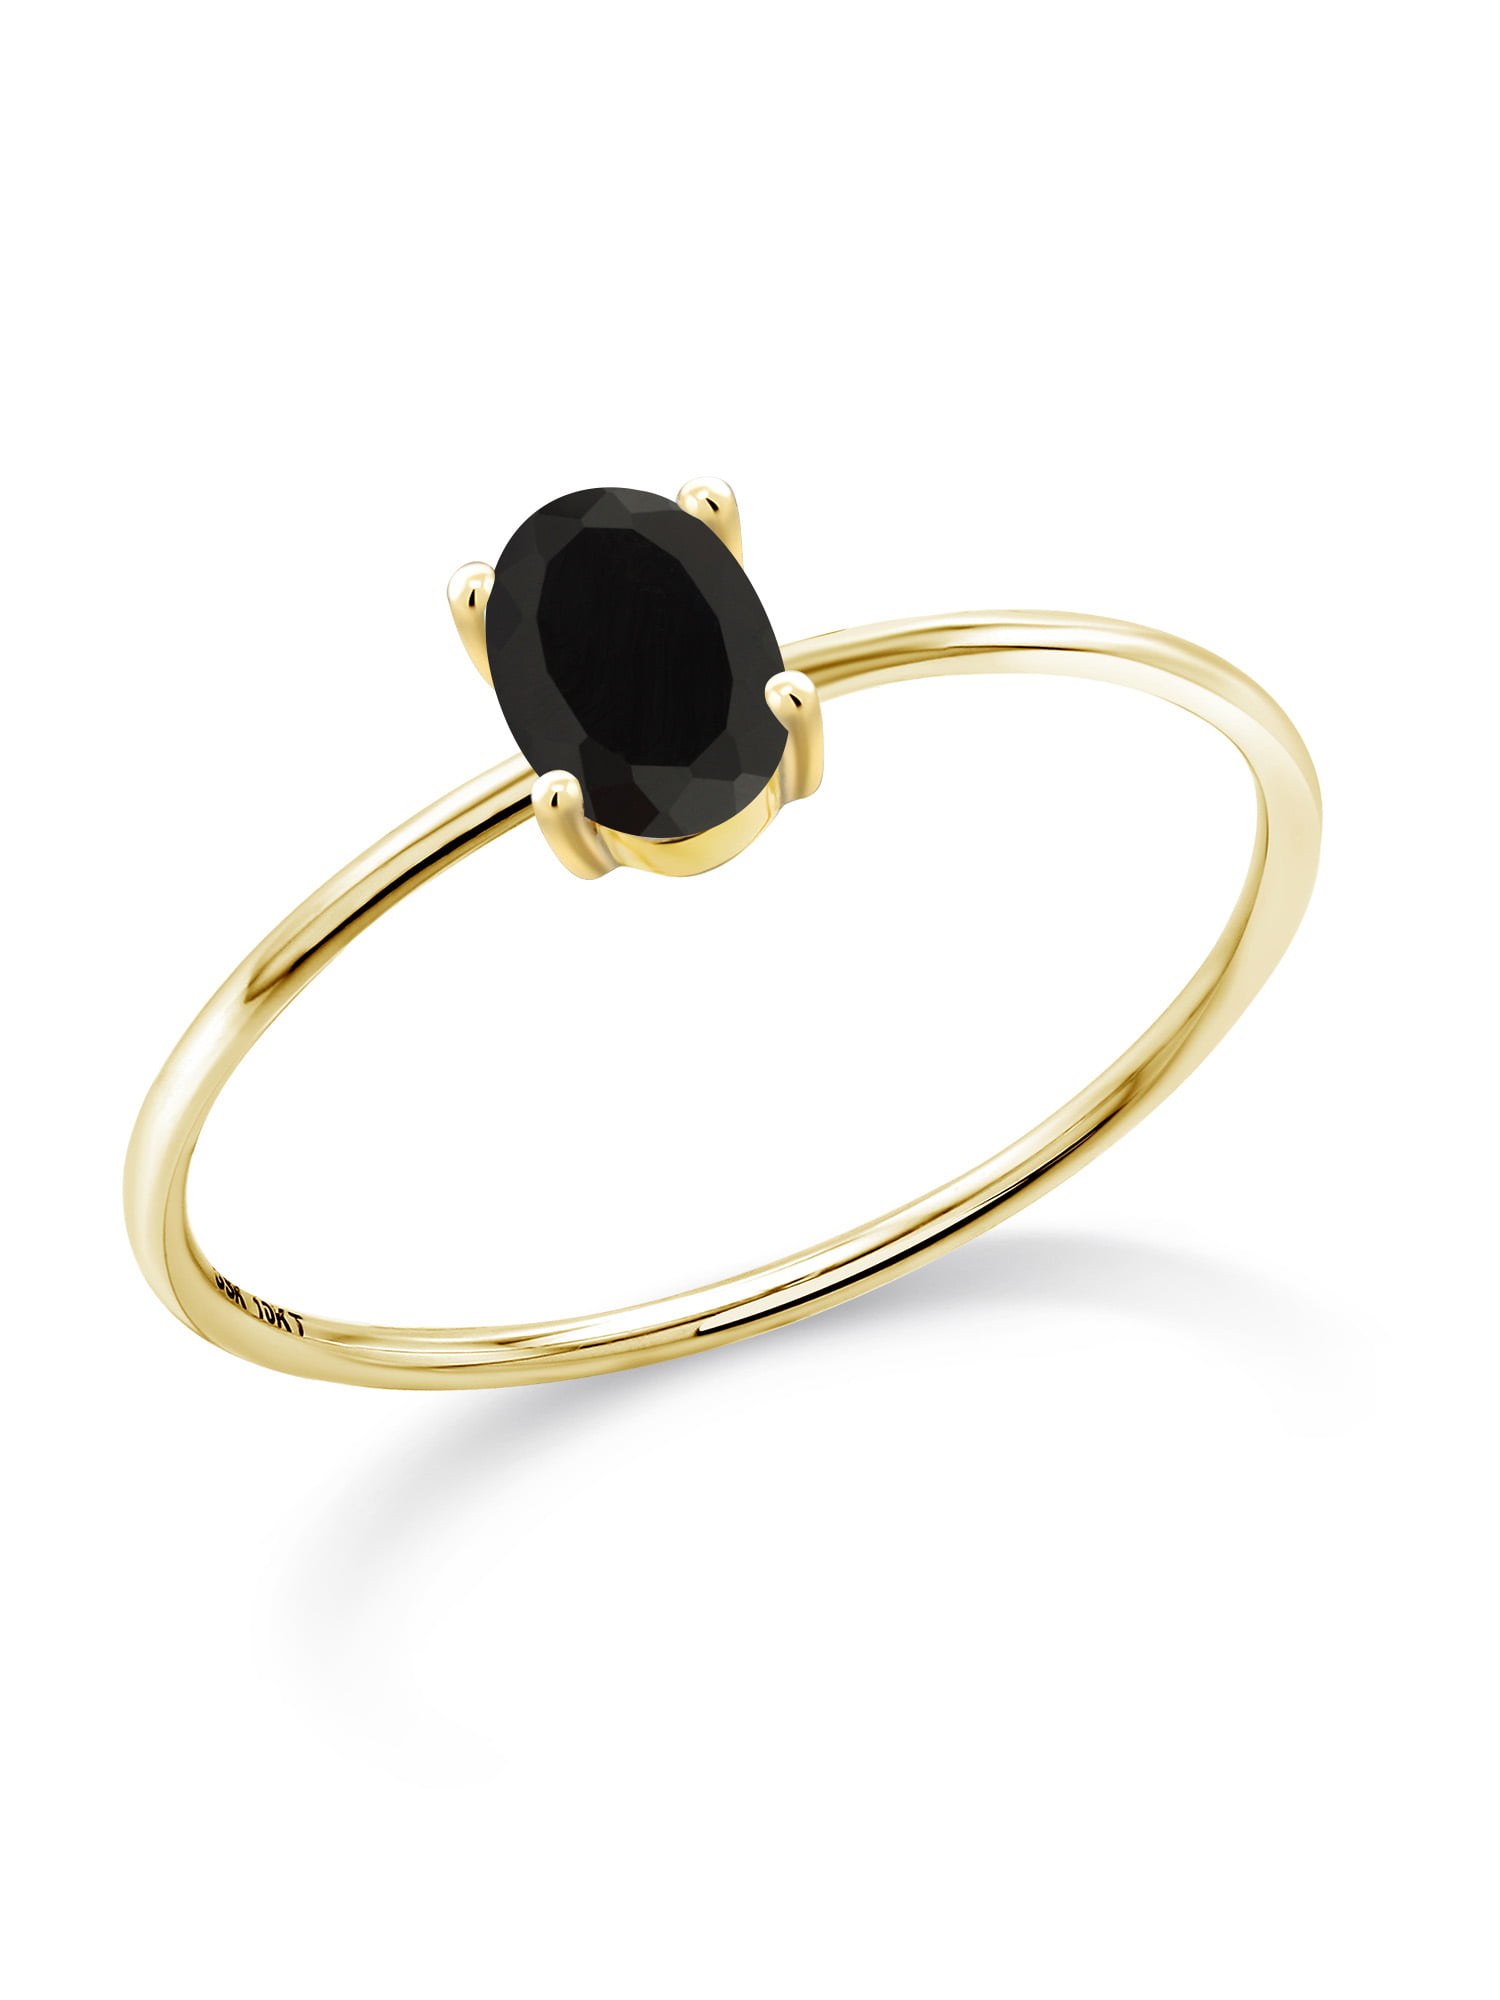 Gem Stone King 10K Yellow Gold Oval Black Onyx Women Engagement Ring